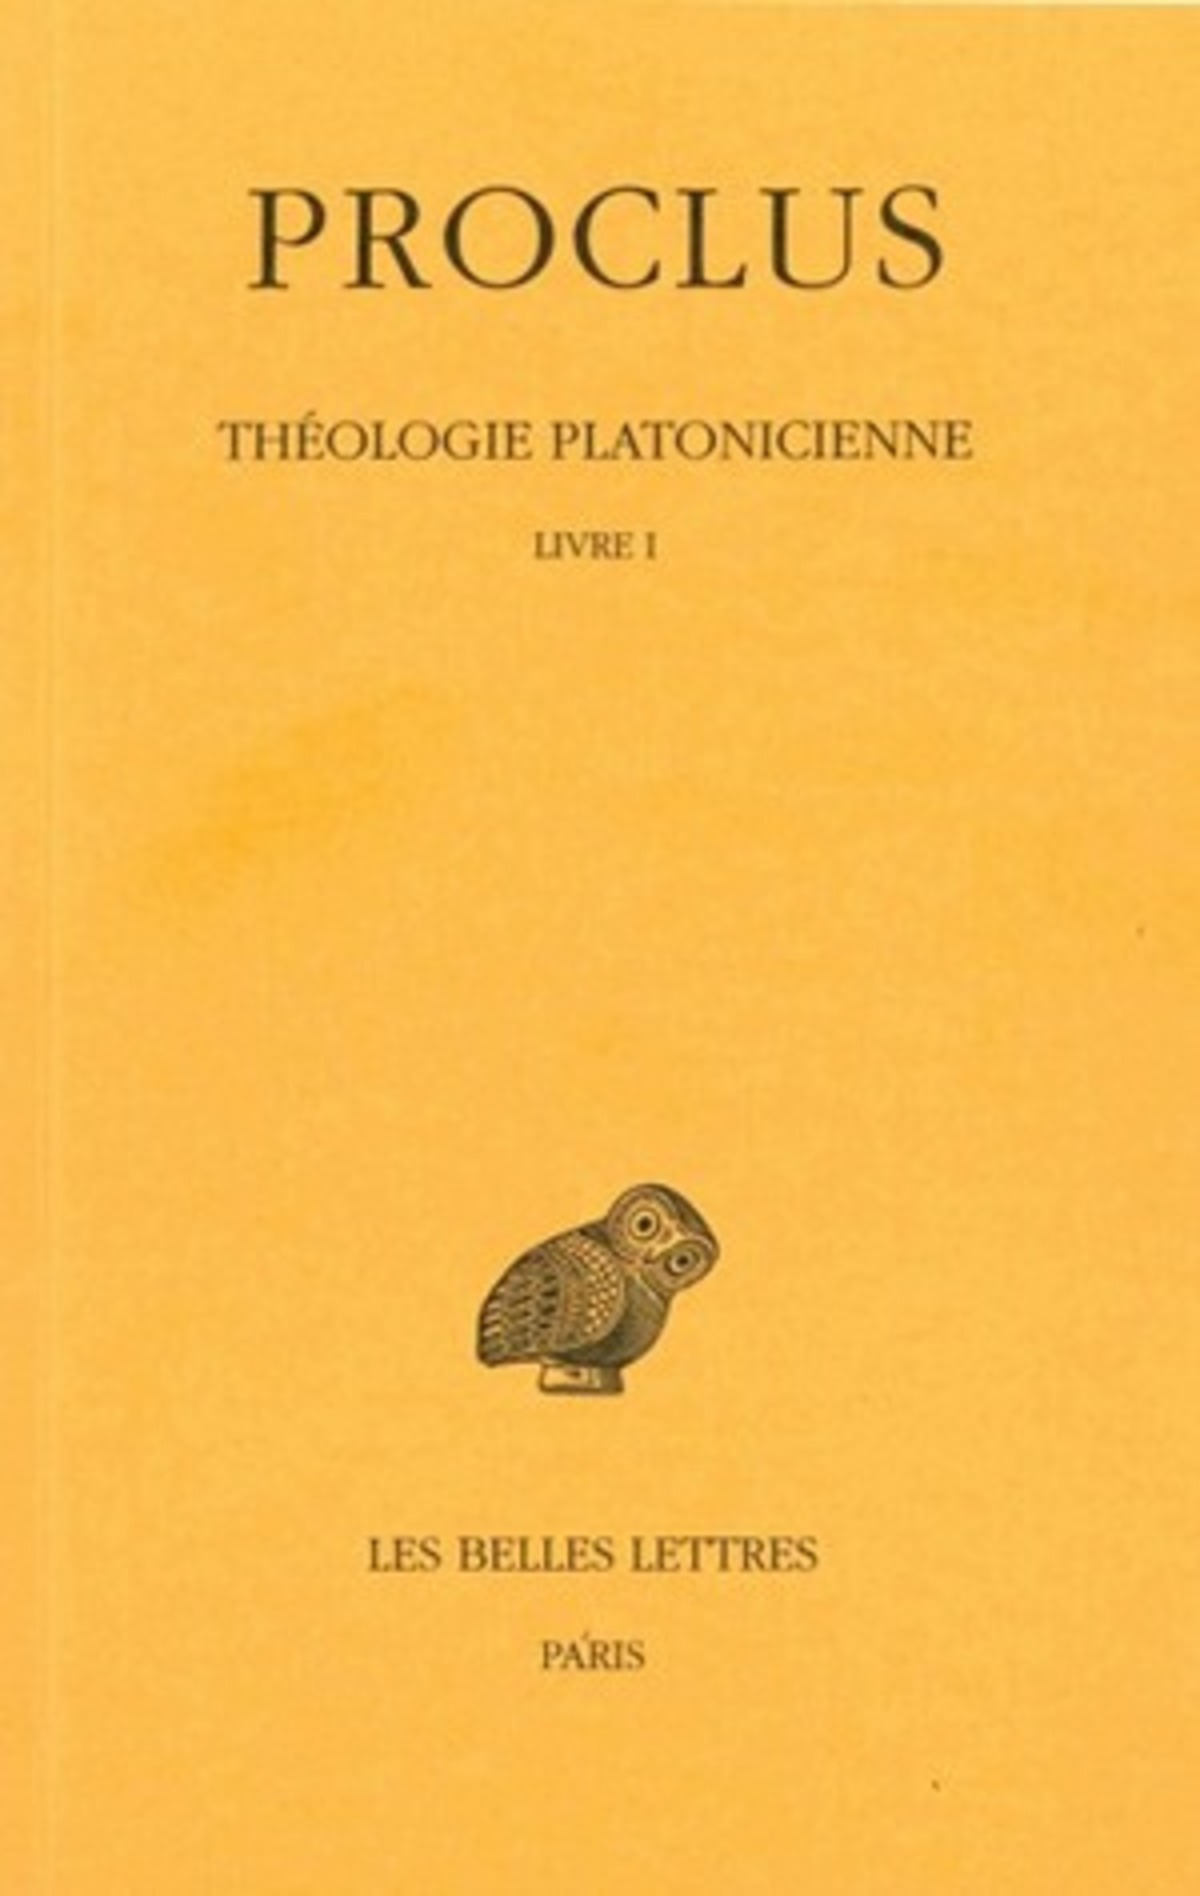 Théologie platonicienne. Tome I : Introduction - Livre I